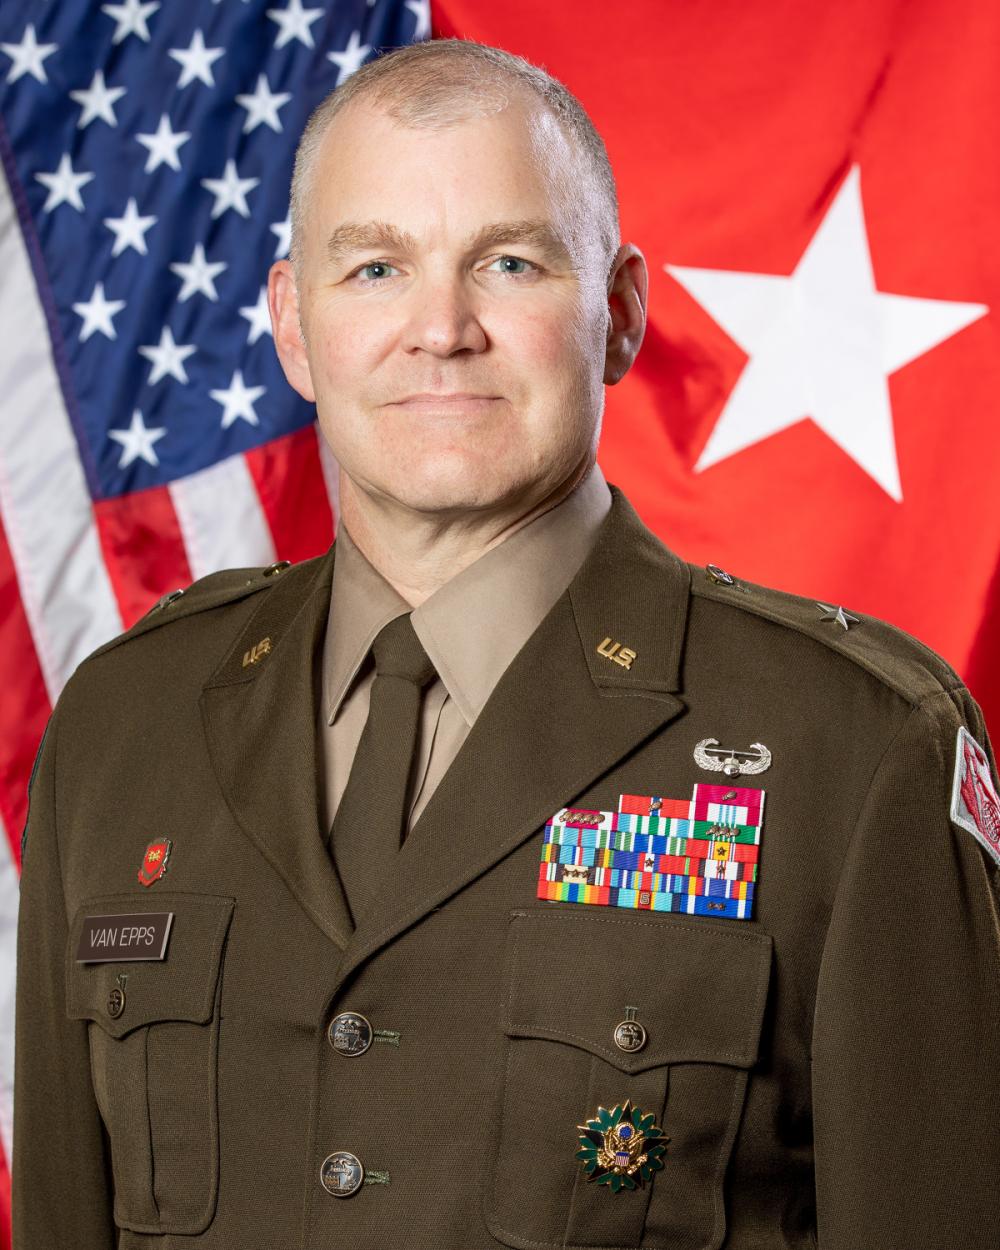 Geoff Van Epps promoted to brigadier general